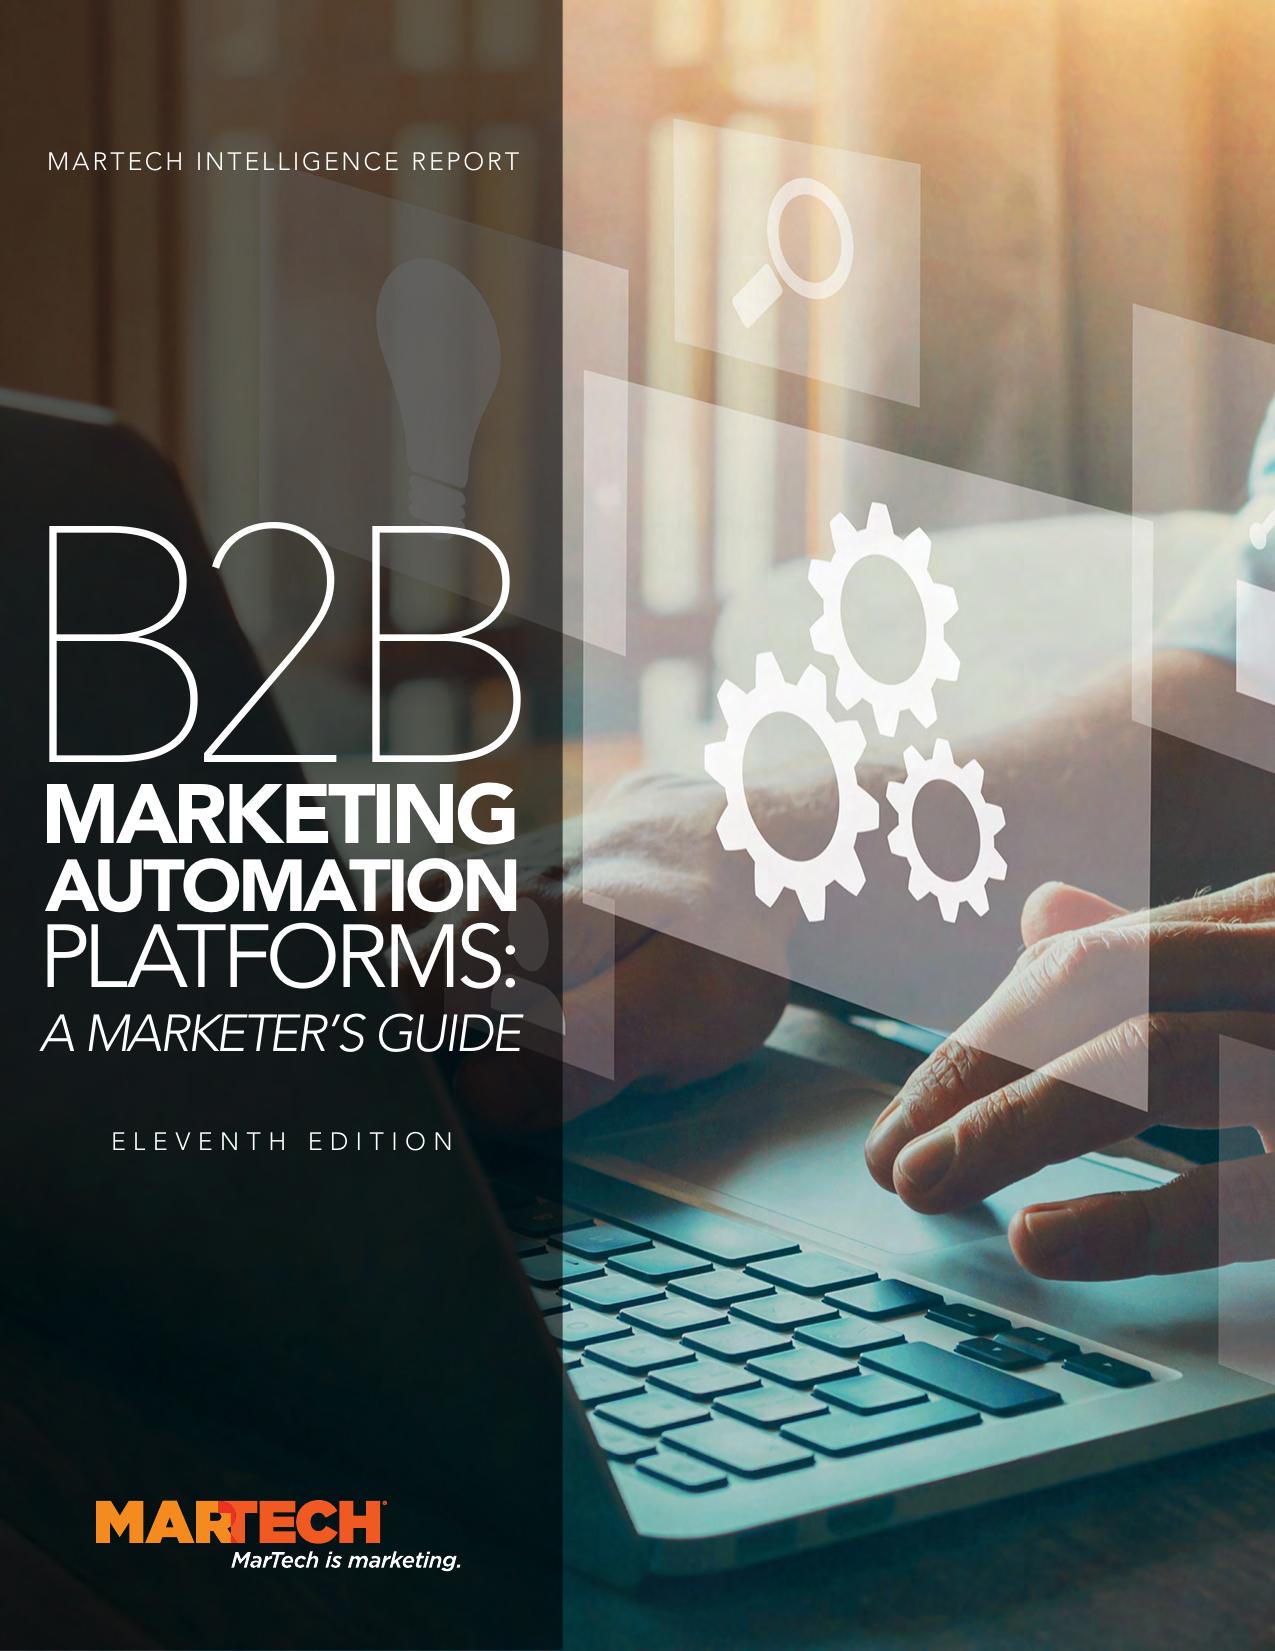 B2B Platform - A Marketer's Guide 11th. Ed.